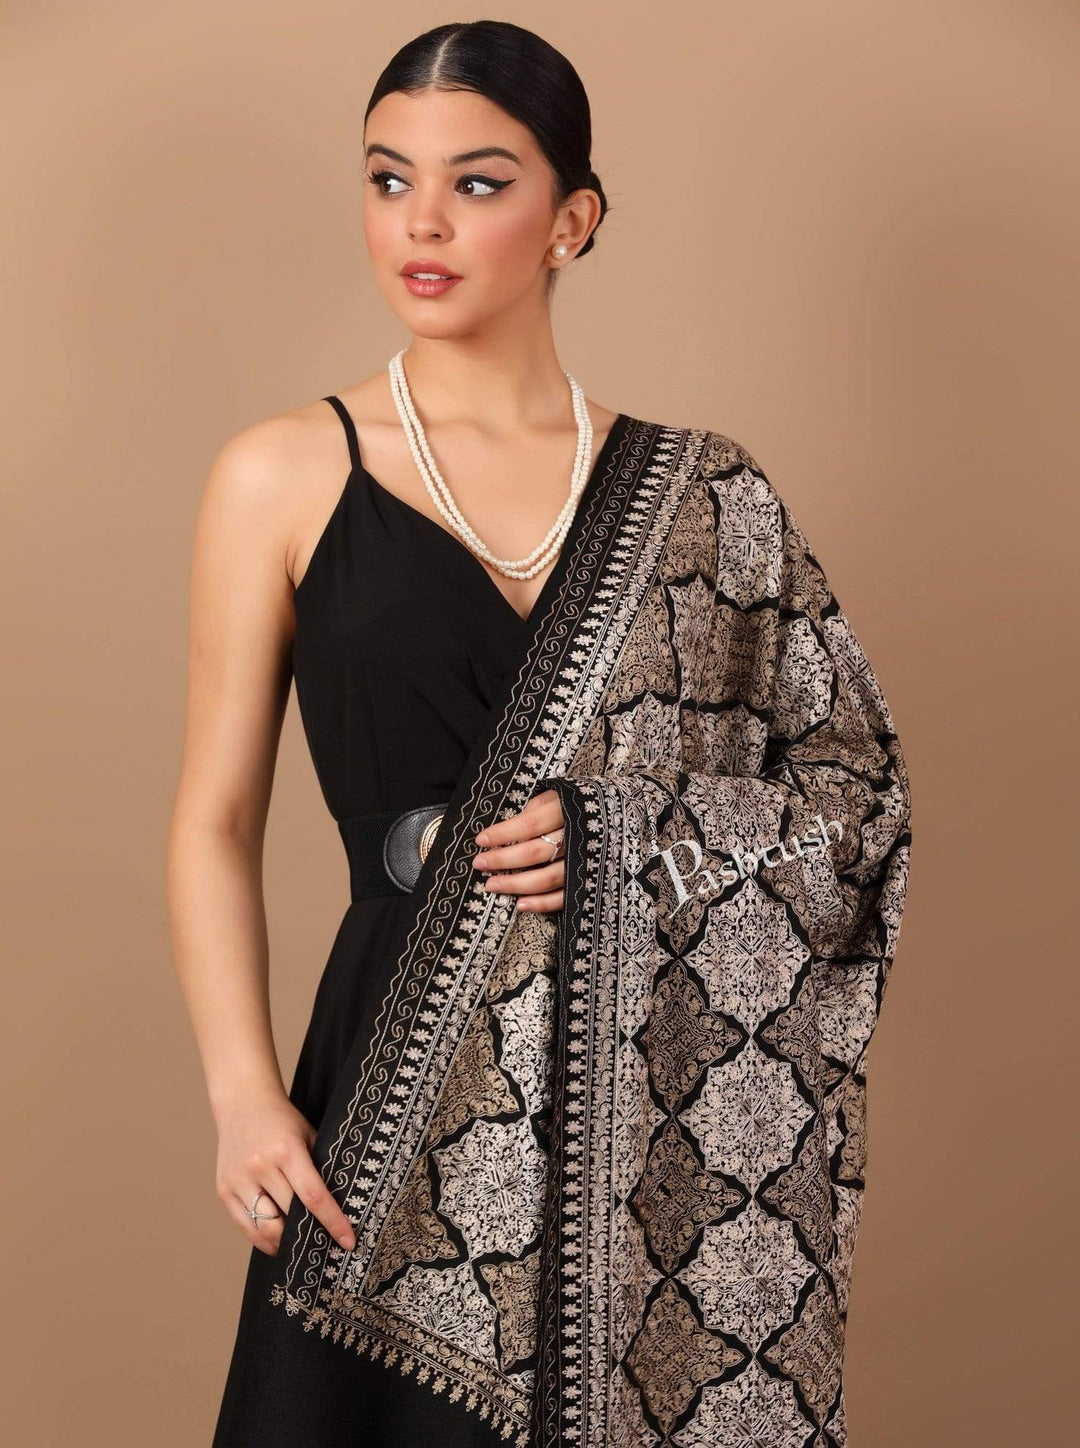 Pashtush Store Shawl Pashtush Womens Fine Wool, Silky Nalki Embroidery Needlework Shawl, Black